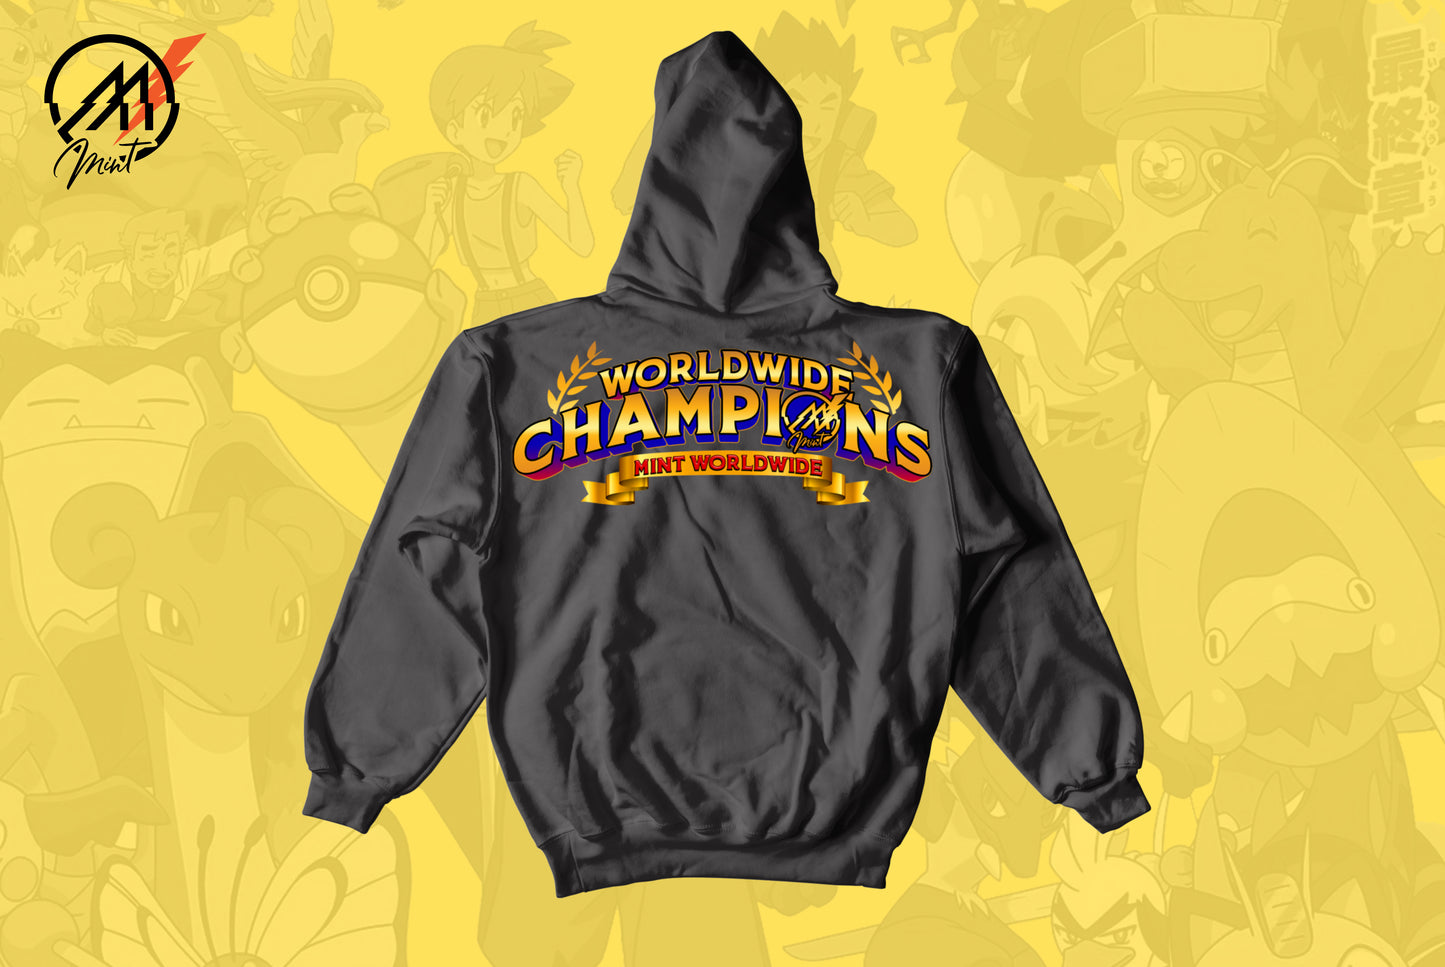 Worldwide Champions " ASH " Hoodie